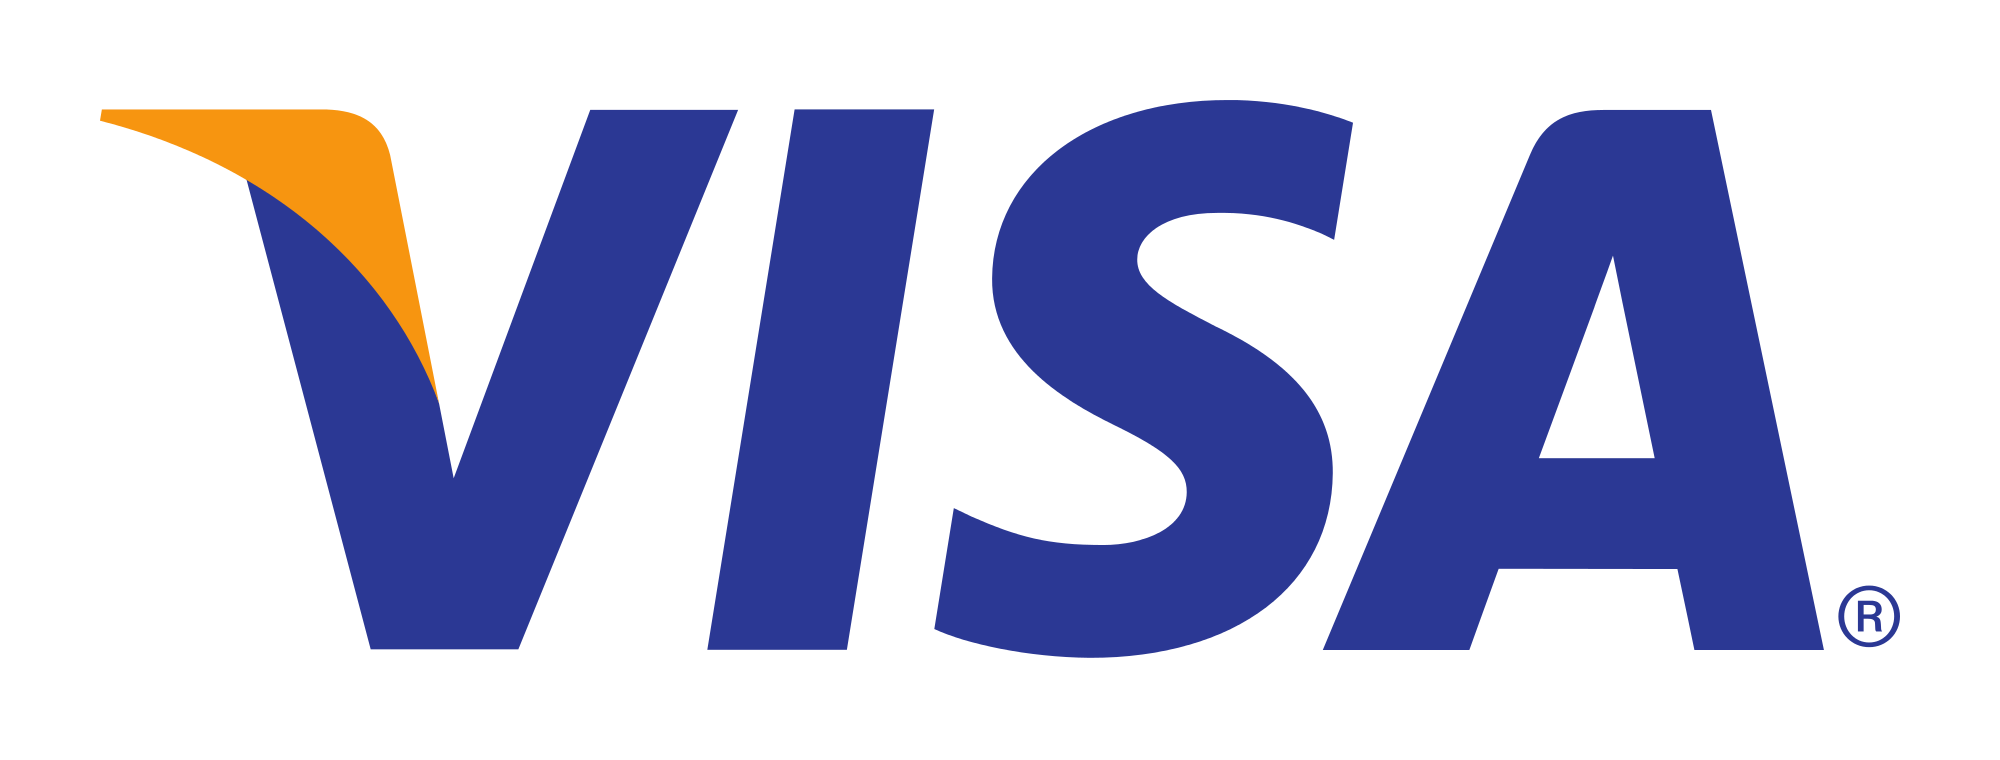 visa-logo.png